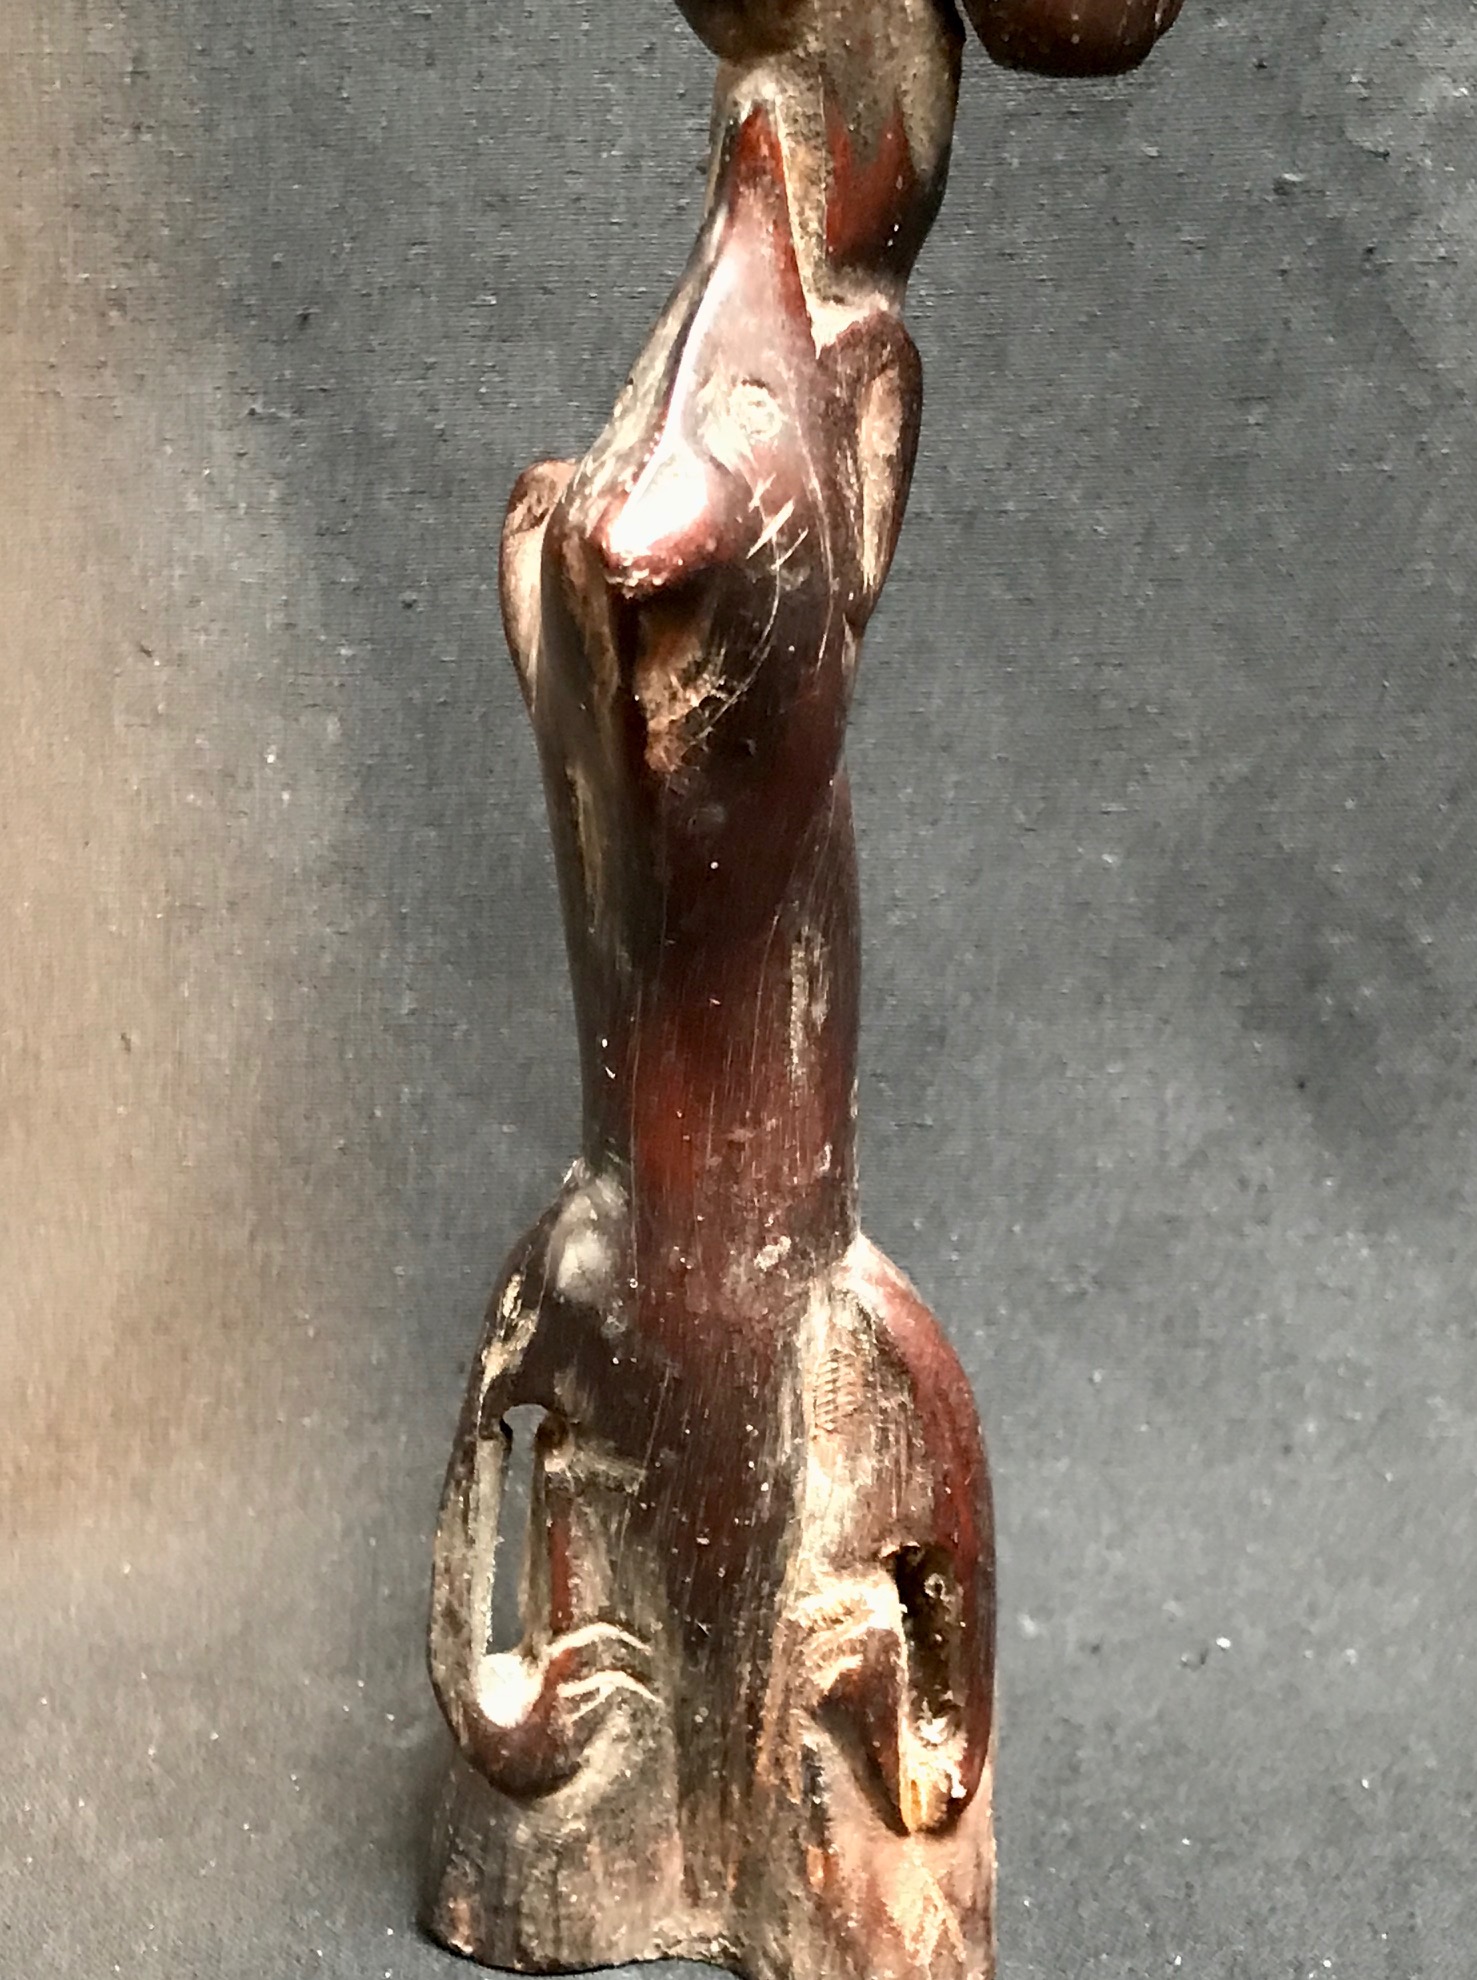 Detail of Shaman's Power Object/Healing Wand, Cat, Horse, Dog, Bird, Sumba Island, Indonesia, Early 20th c., wood, 9 1/2" x 2 1/4" x 2"